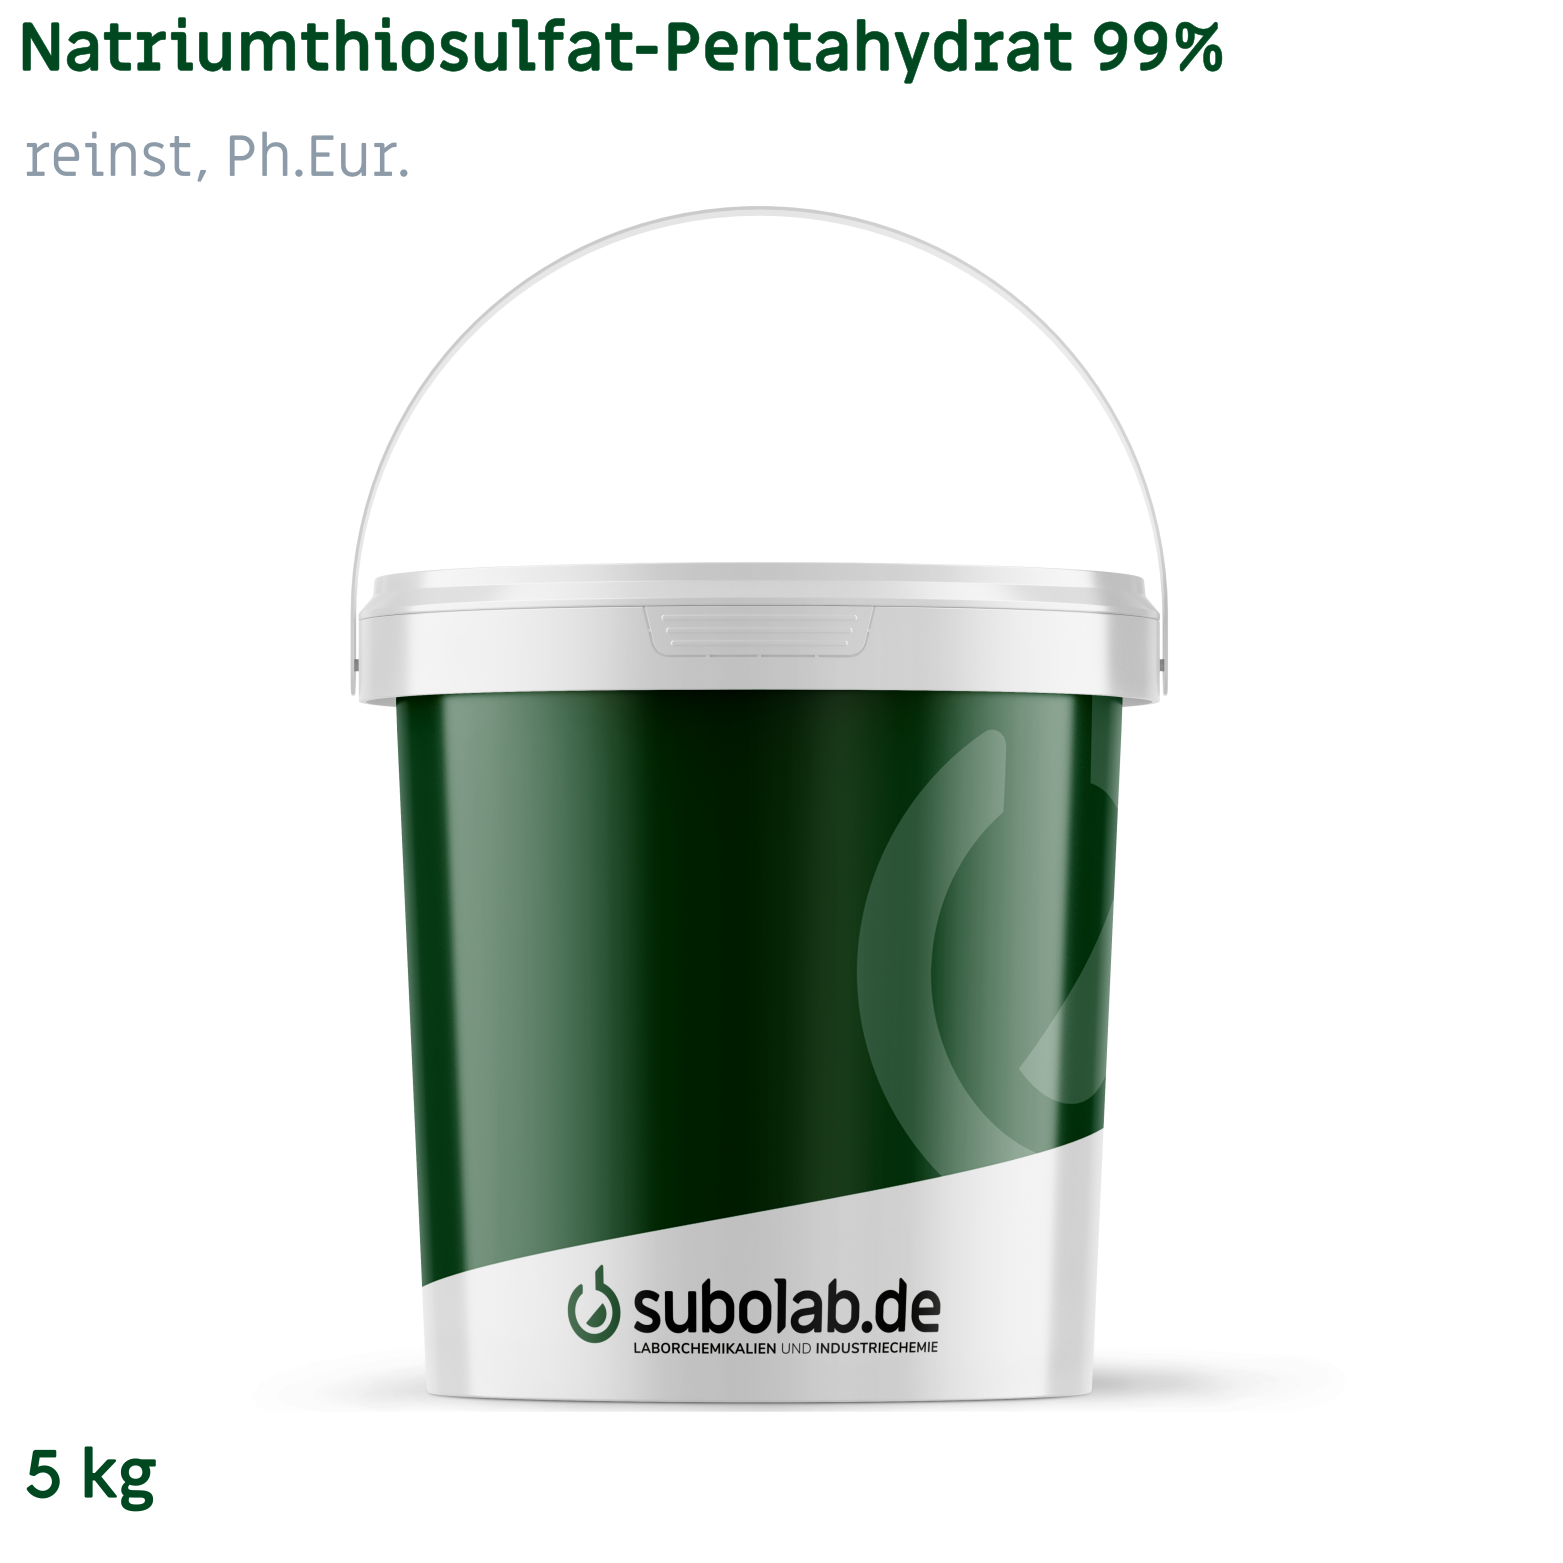 Bild von Natriumthiosulfat - Pentahydrat 99% reinst, Ph.Eur. (5 kg)